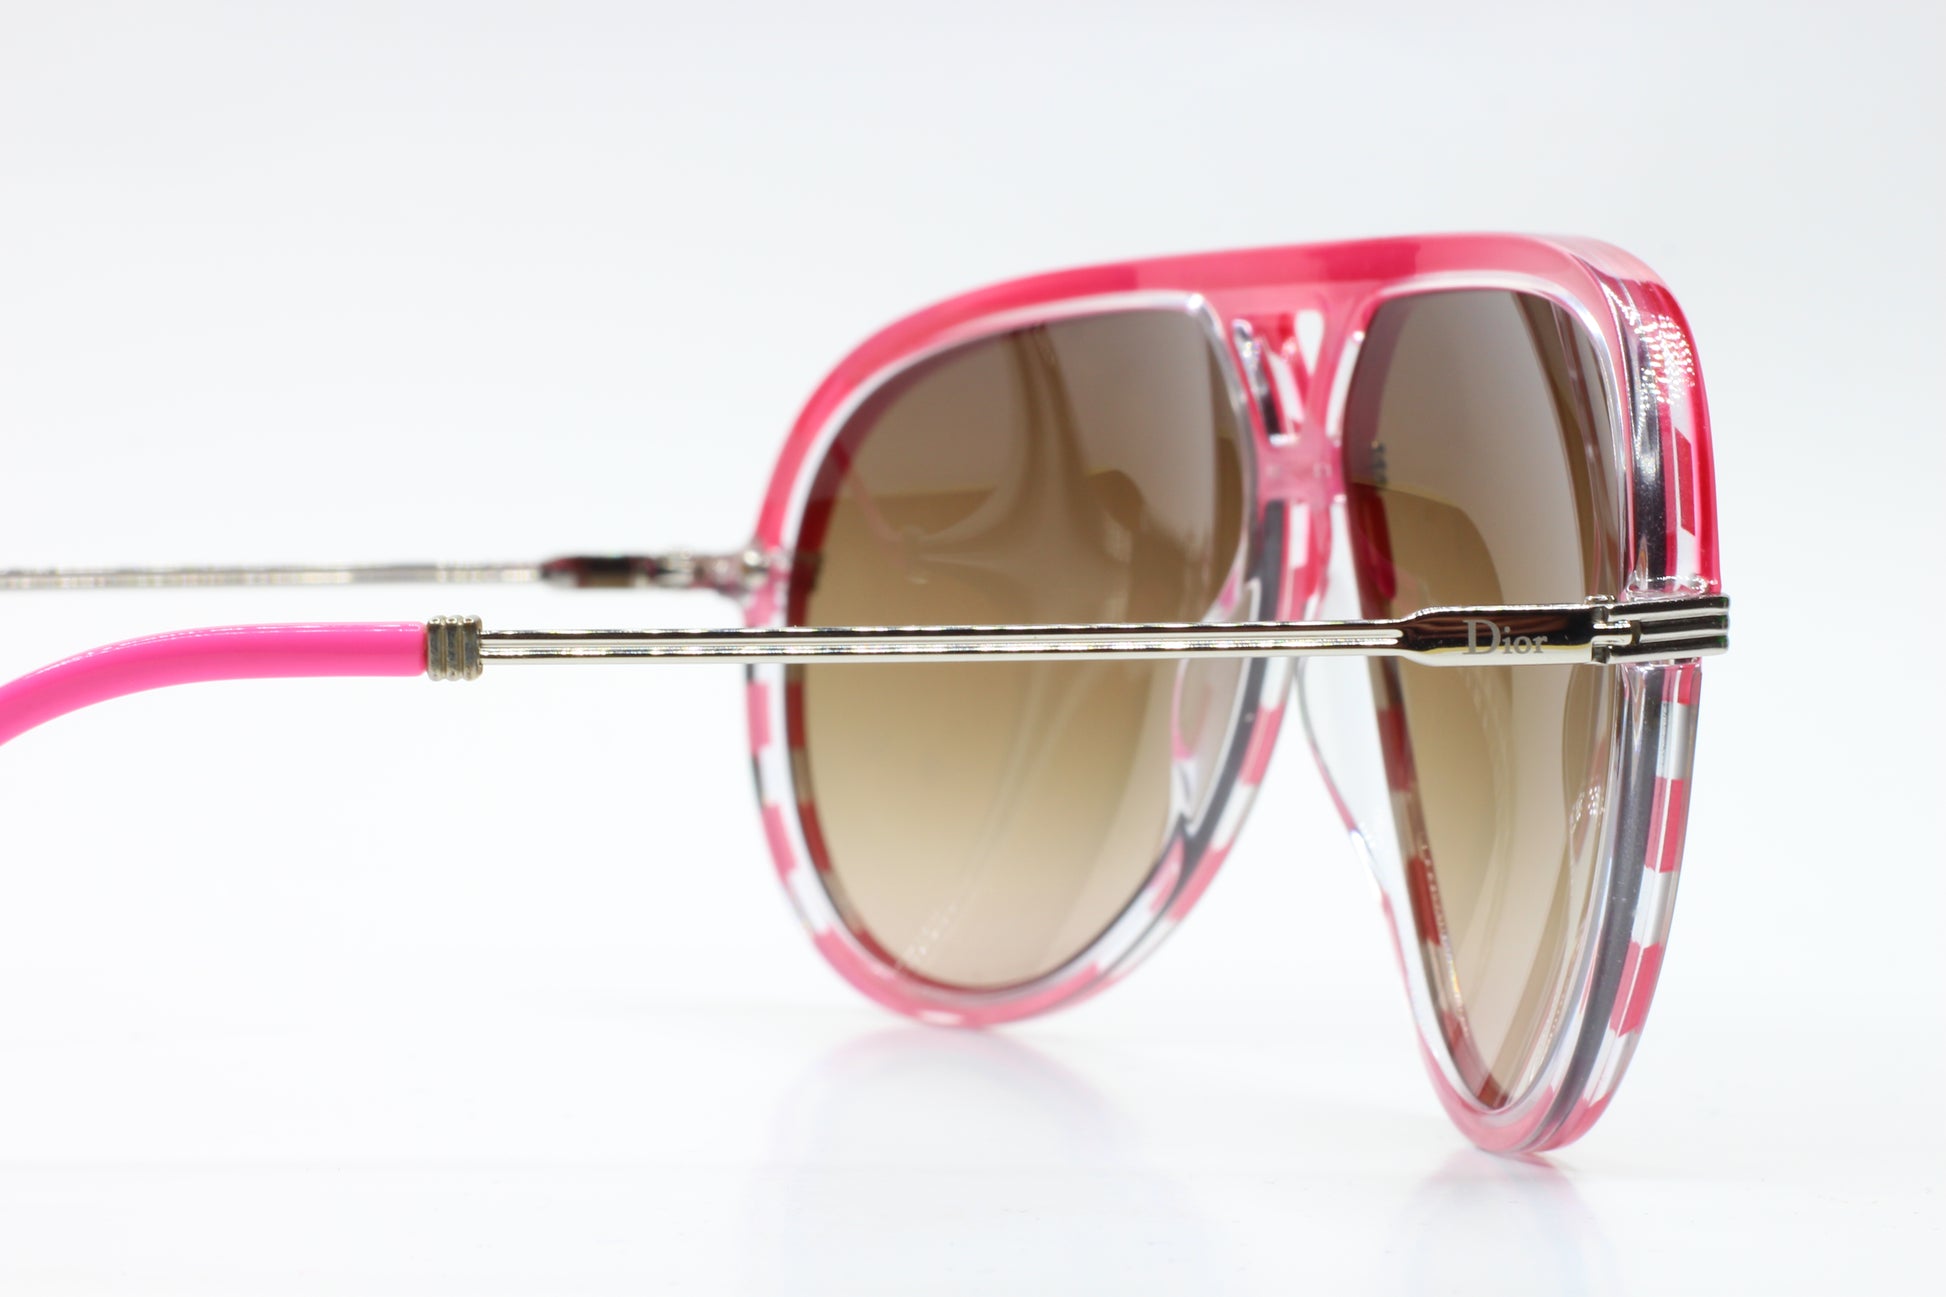 Christian Dior S2201 Croisette 2 DWSV6 Pink Luxury Sunglasses - sunglasses